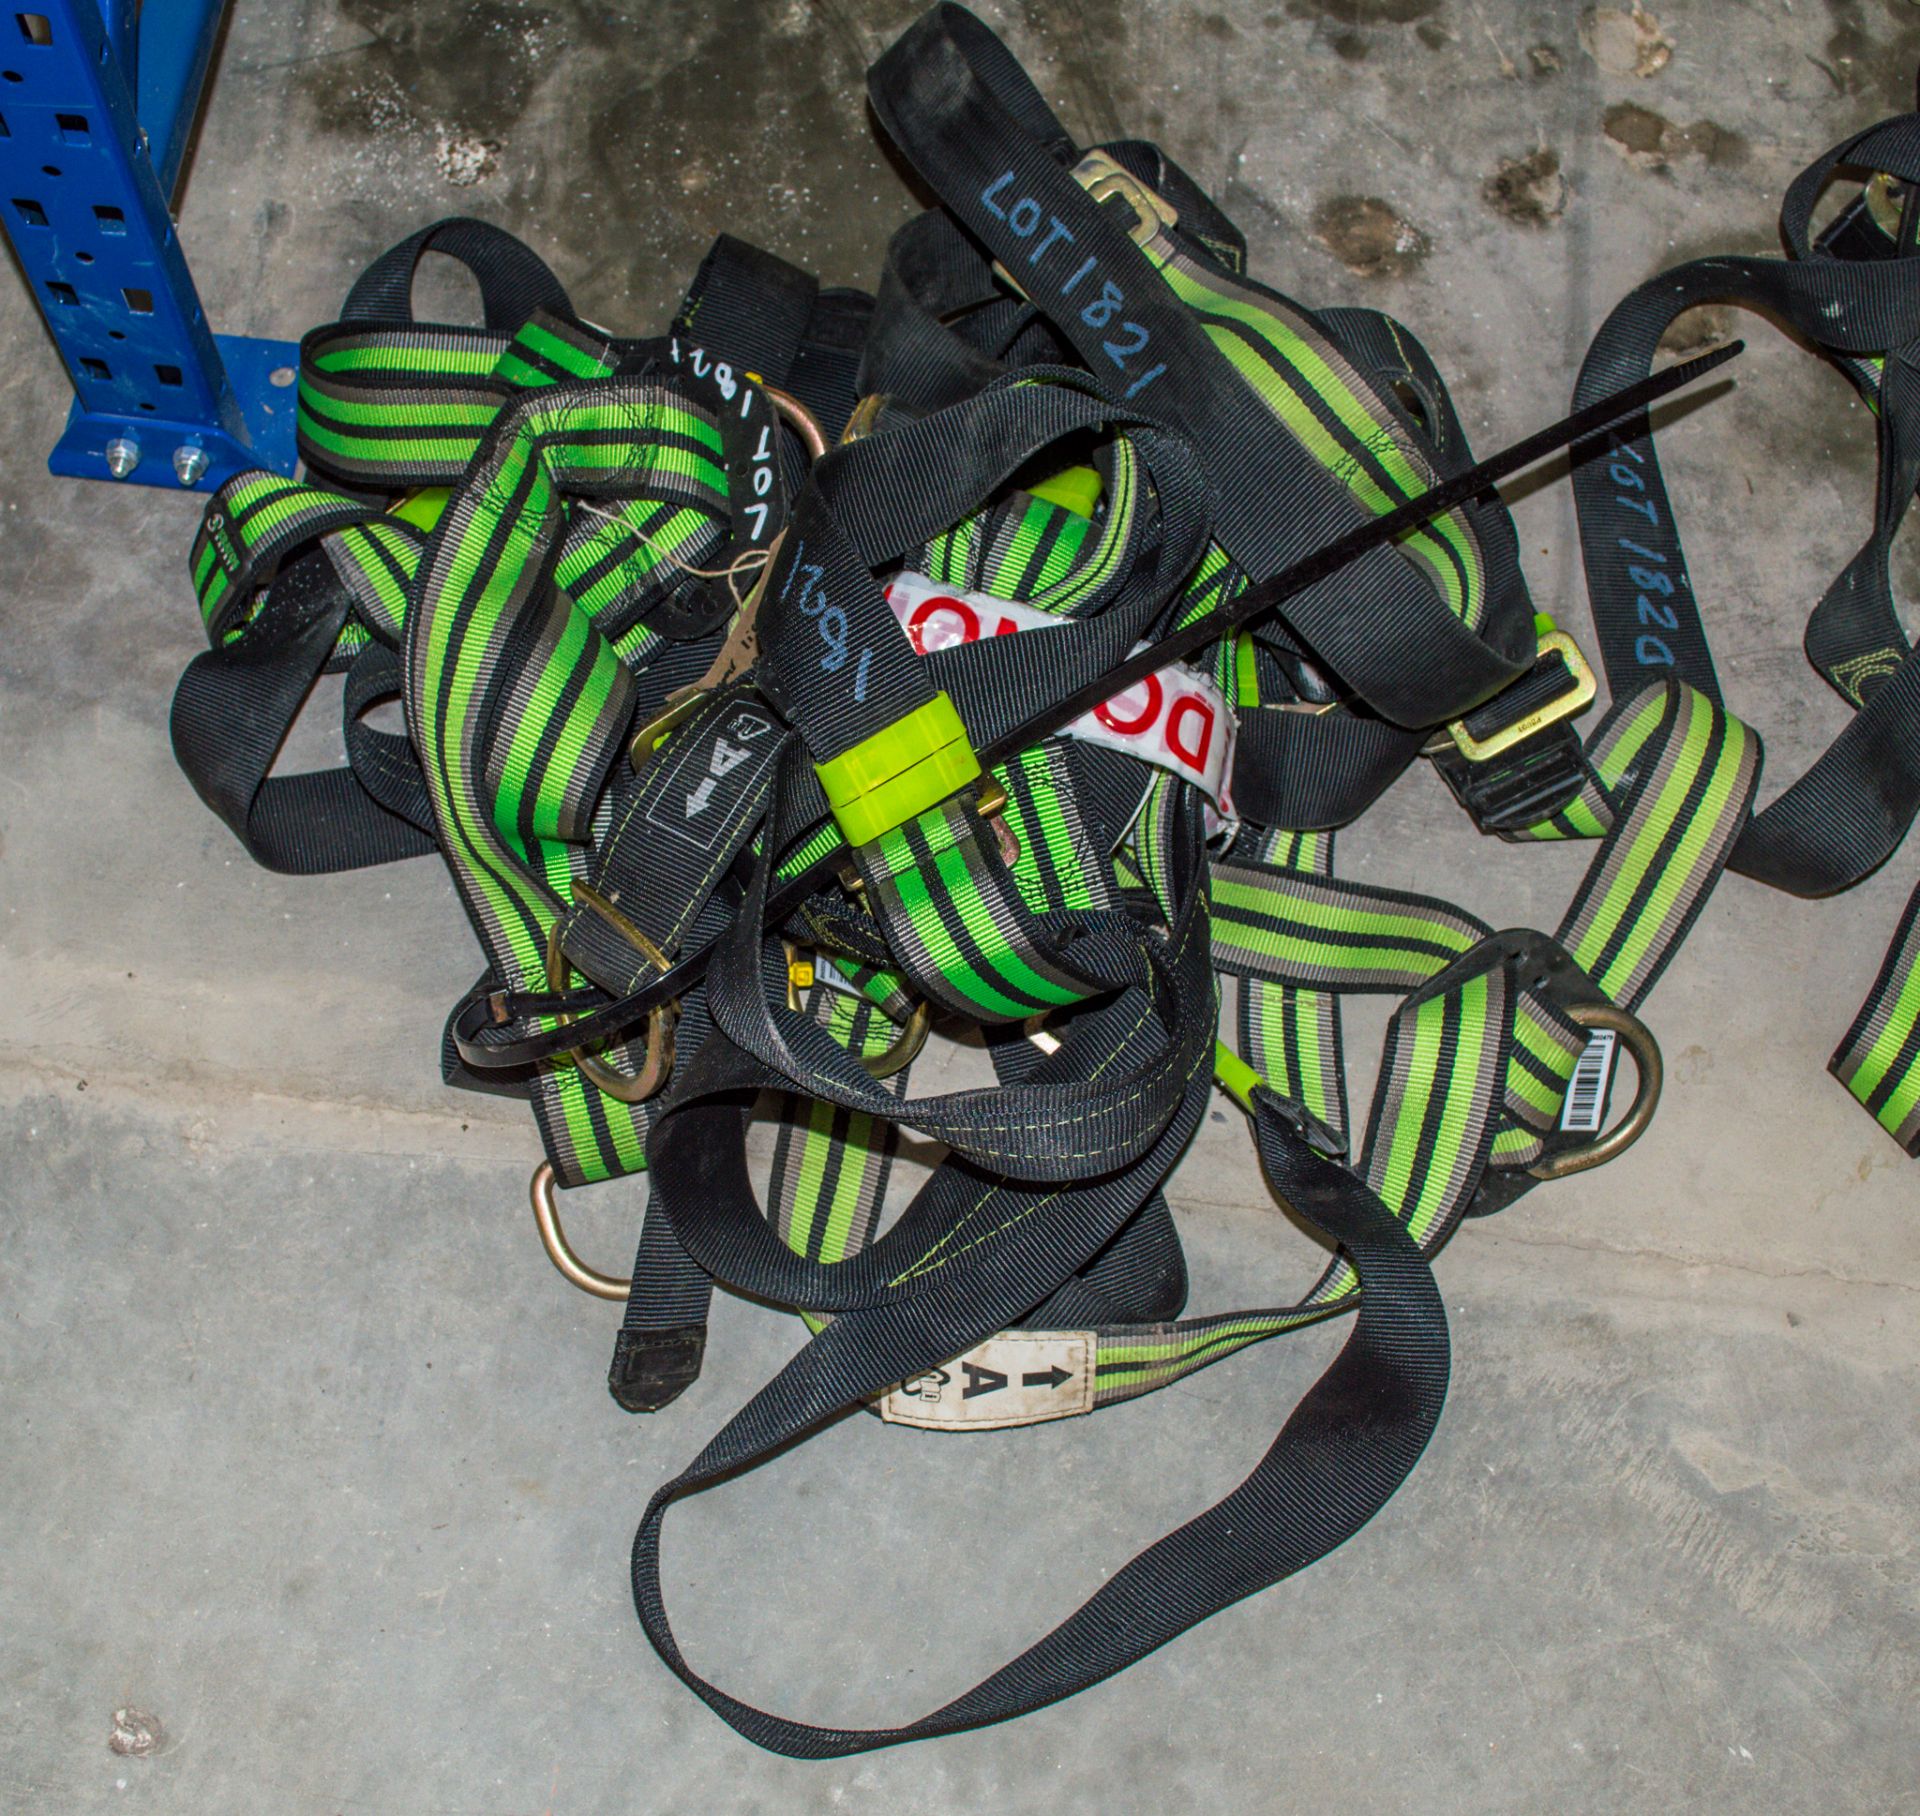 3 - fall arrest harnesses